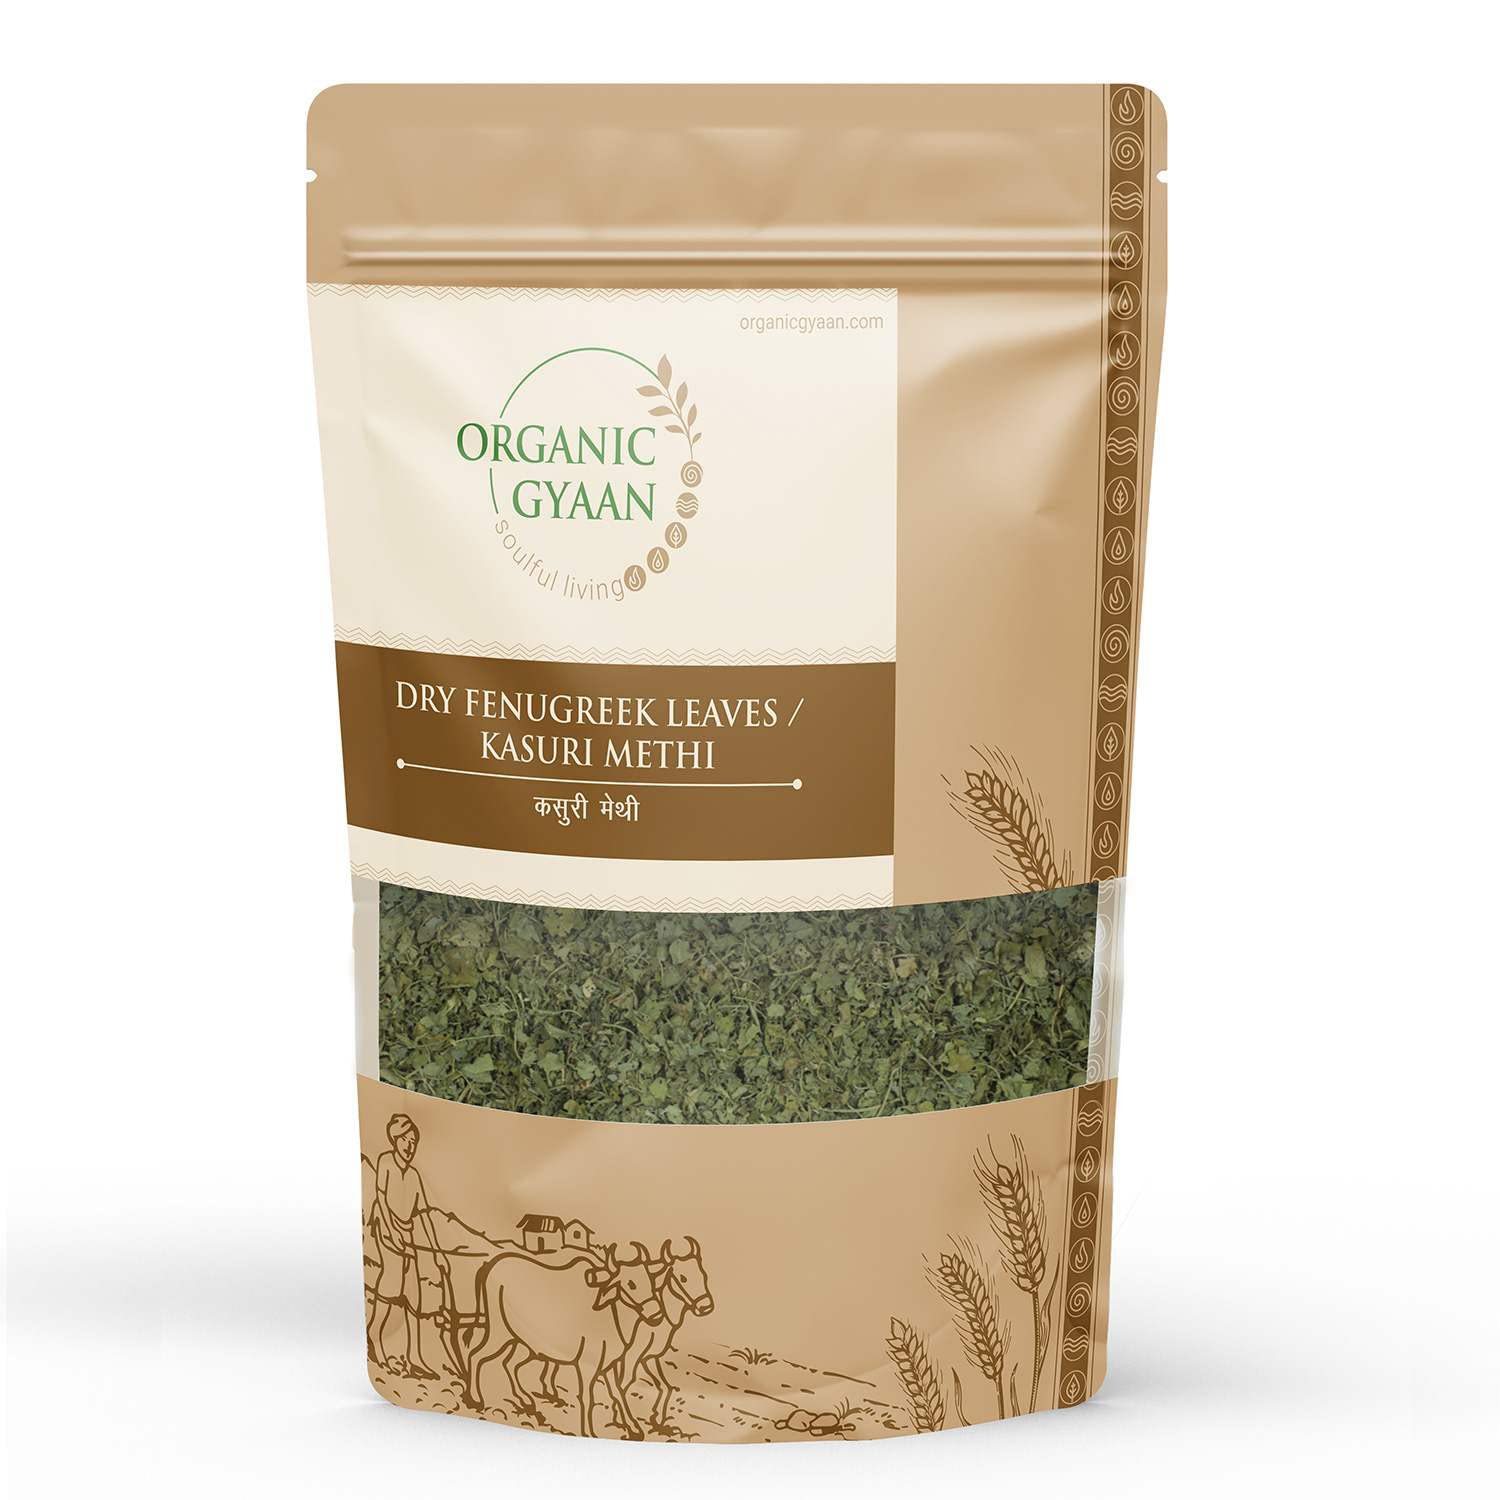 Organic Gyaan Organic Dry Fenugreek Leaves / Kasuri Methi 100gm